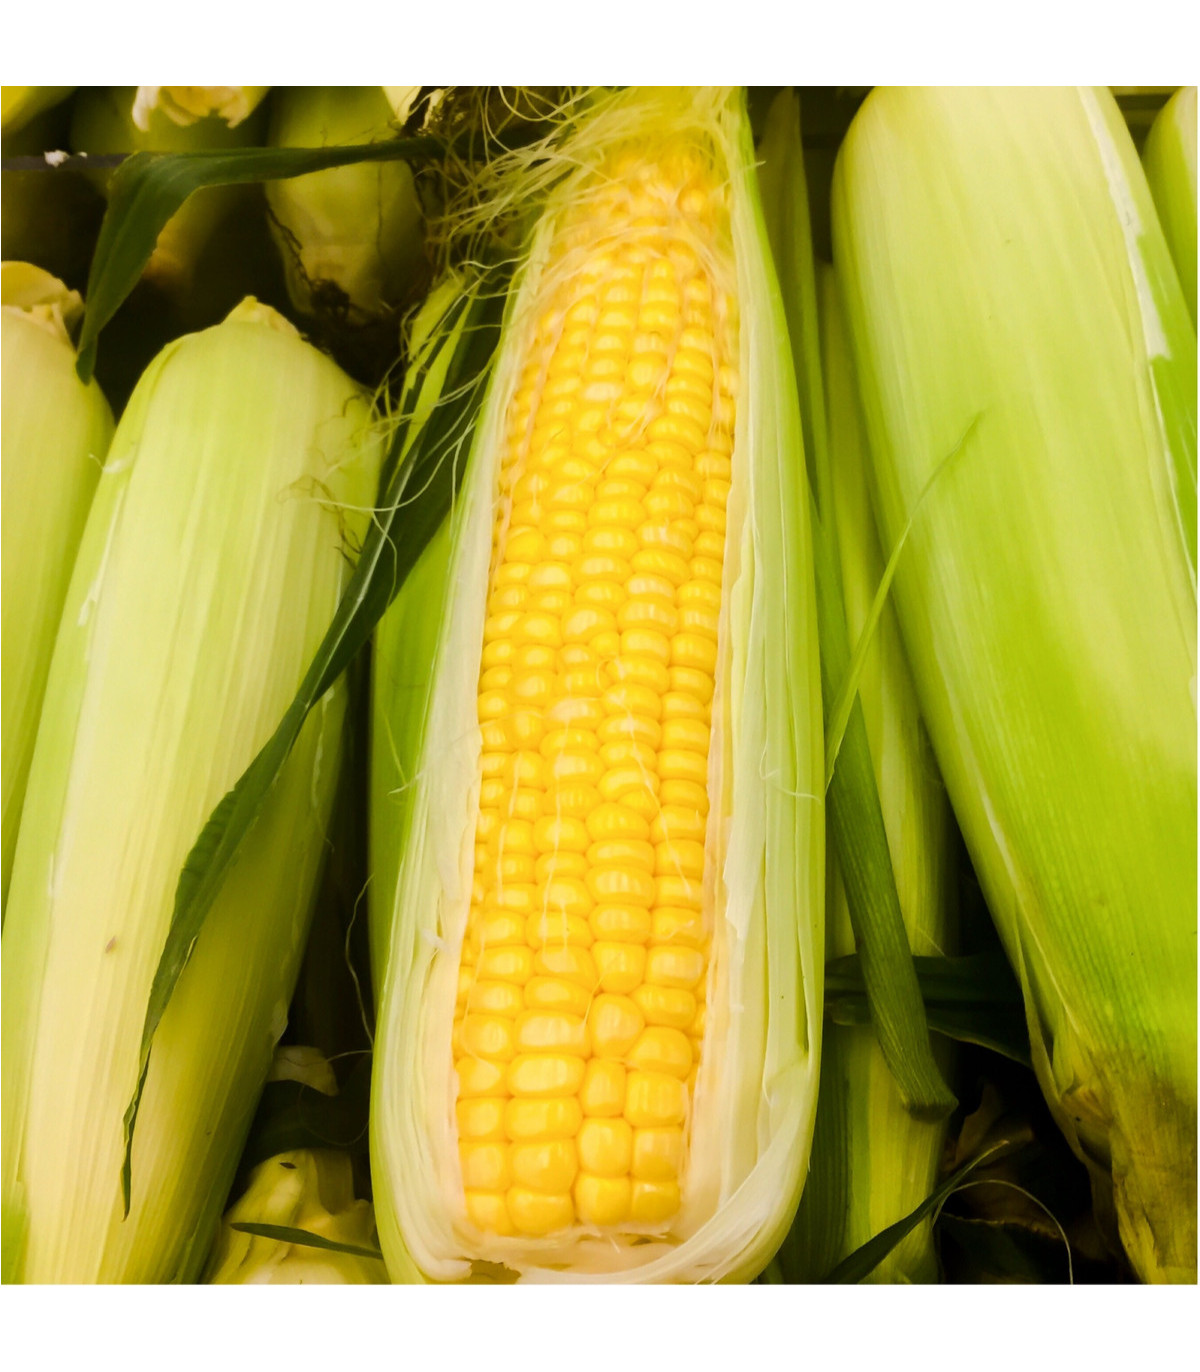 Kukurica cukrová Golden Bantam - Zea Mays - semená kukurice - 16 ks